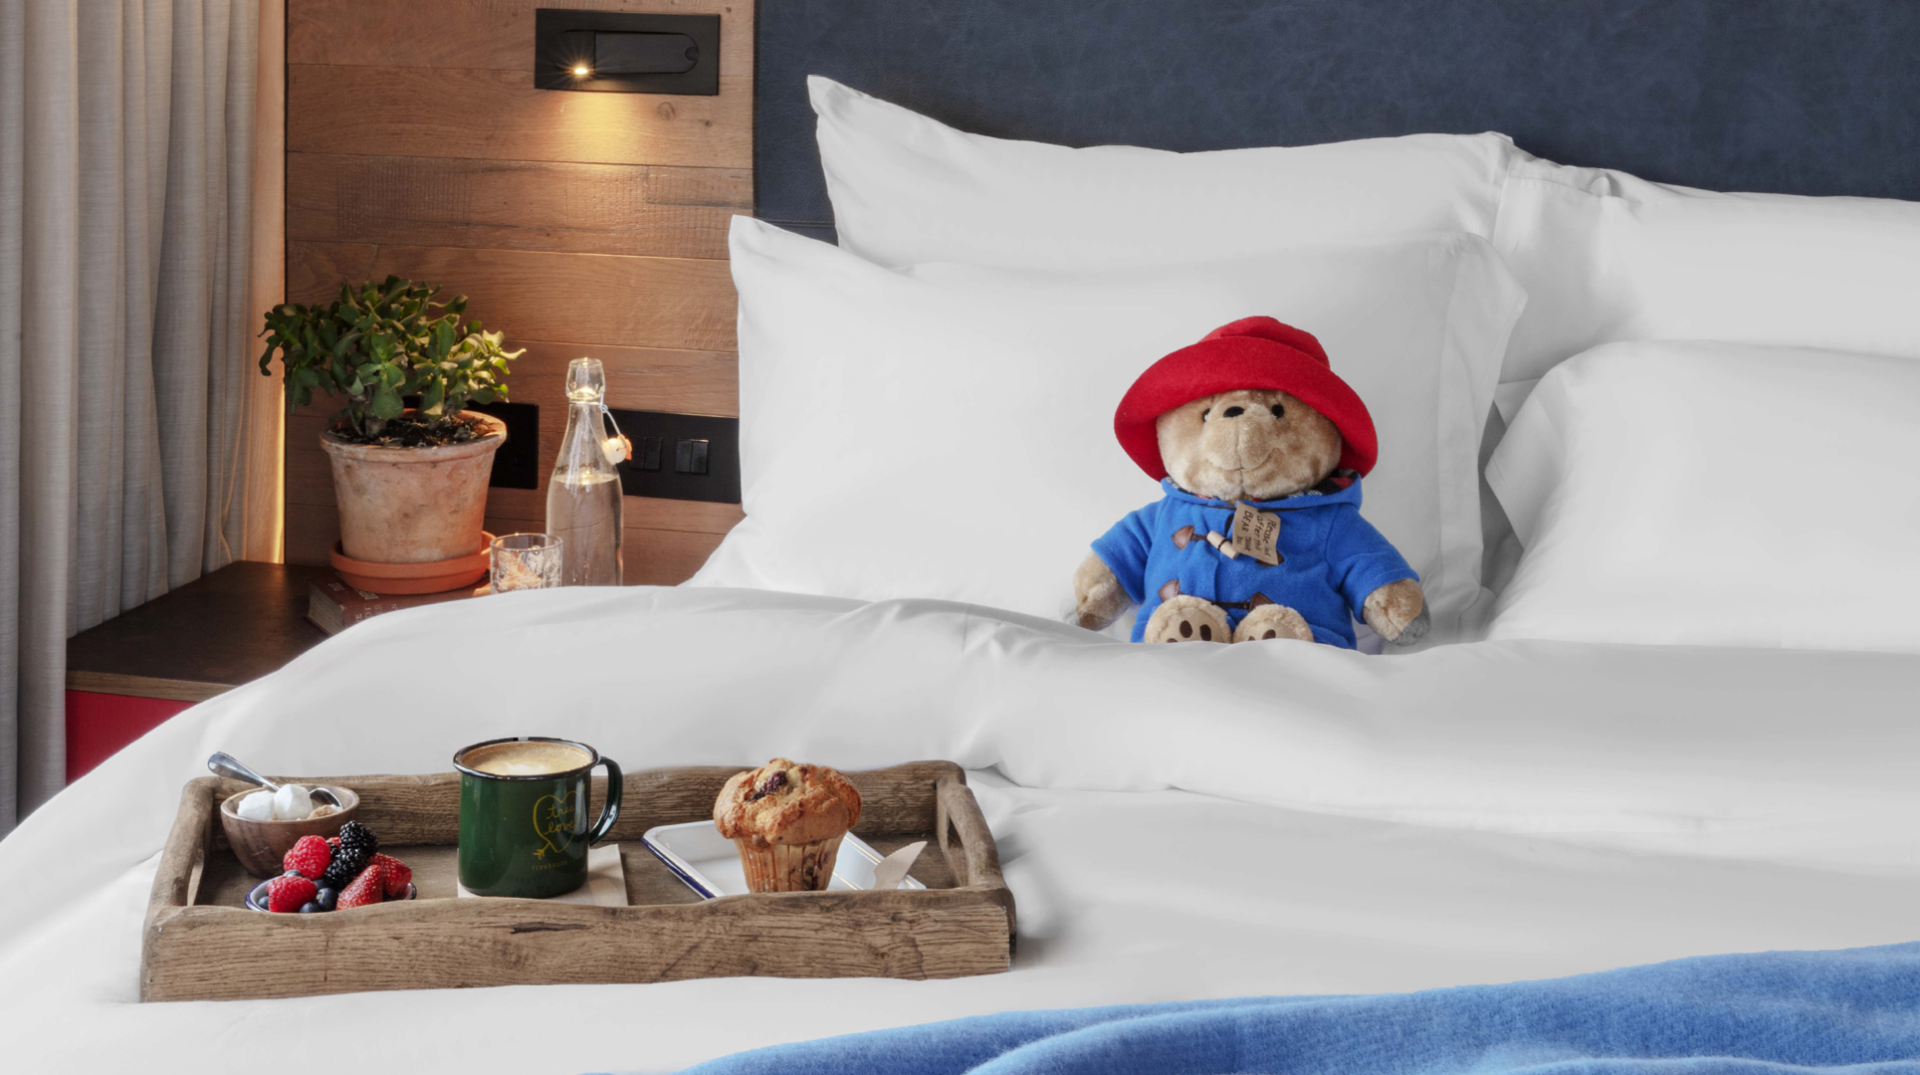 Paddington bear on hotel bed